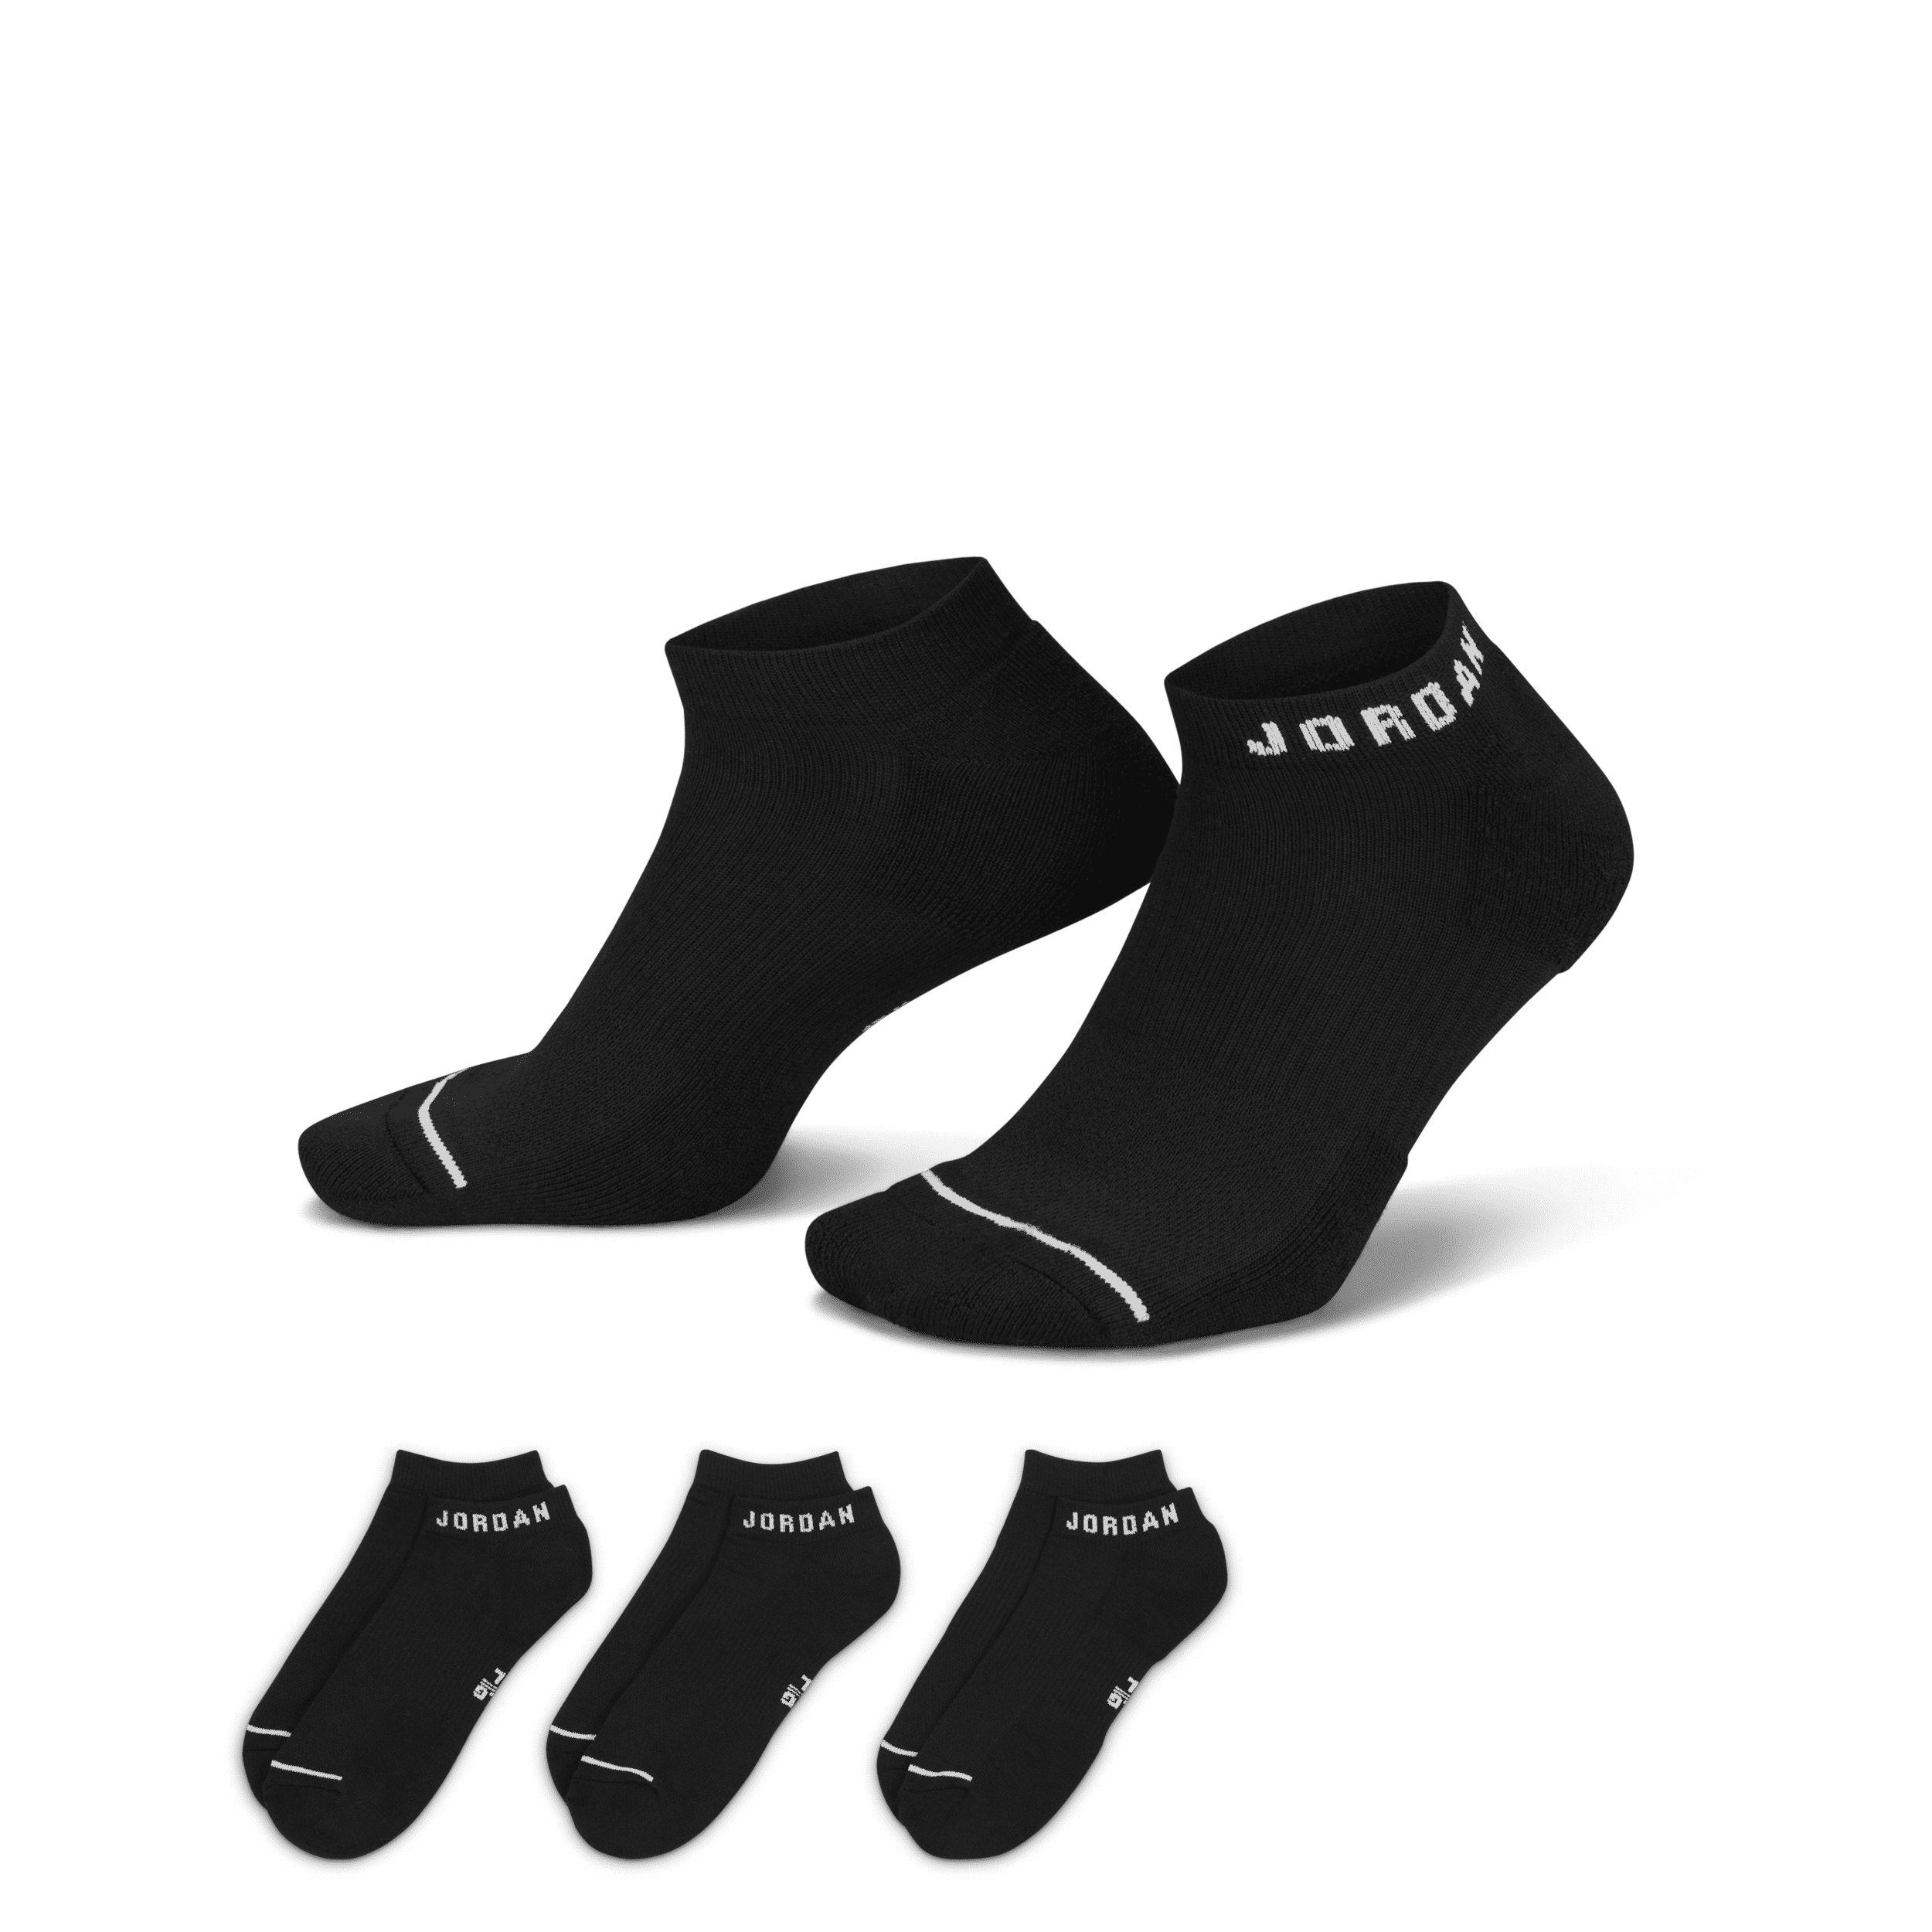 Jordan Calcetines invisibles de diario (3 pares) - Negro